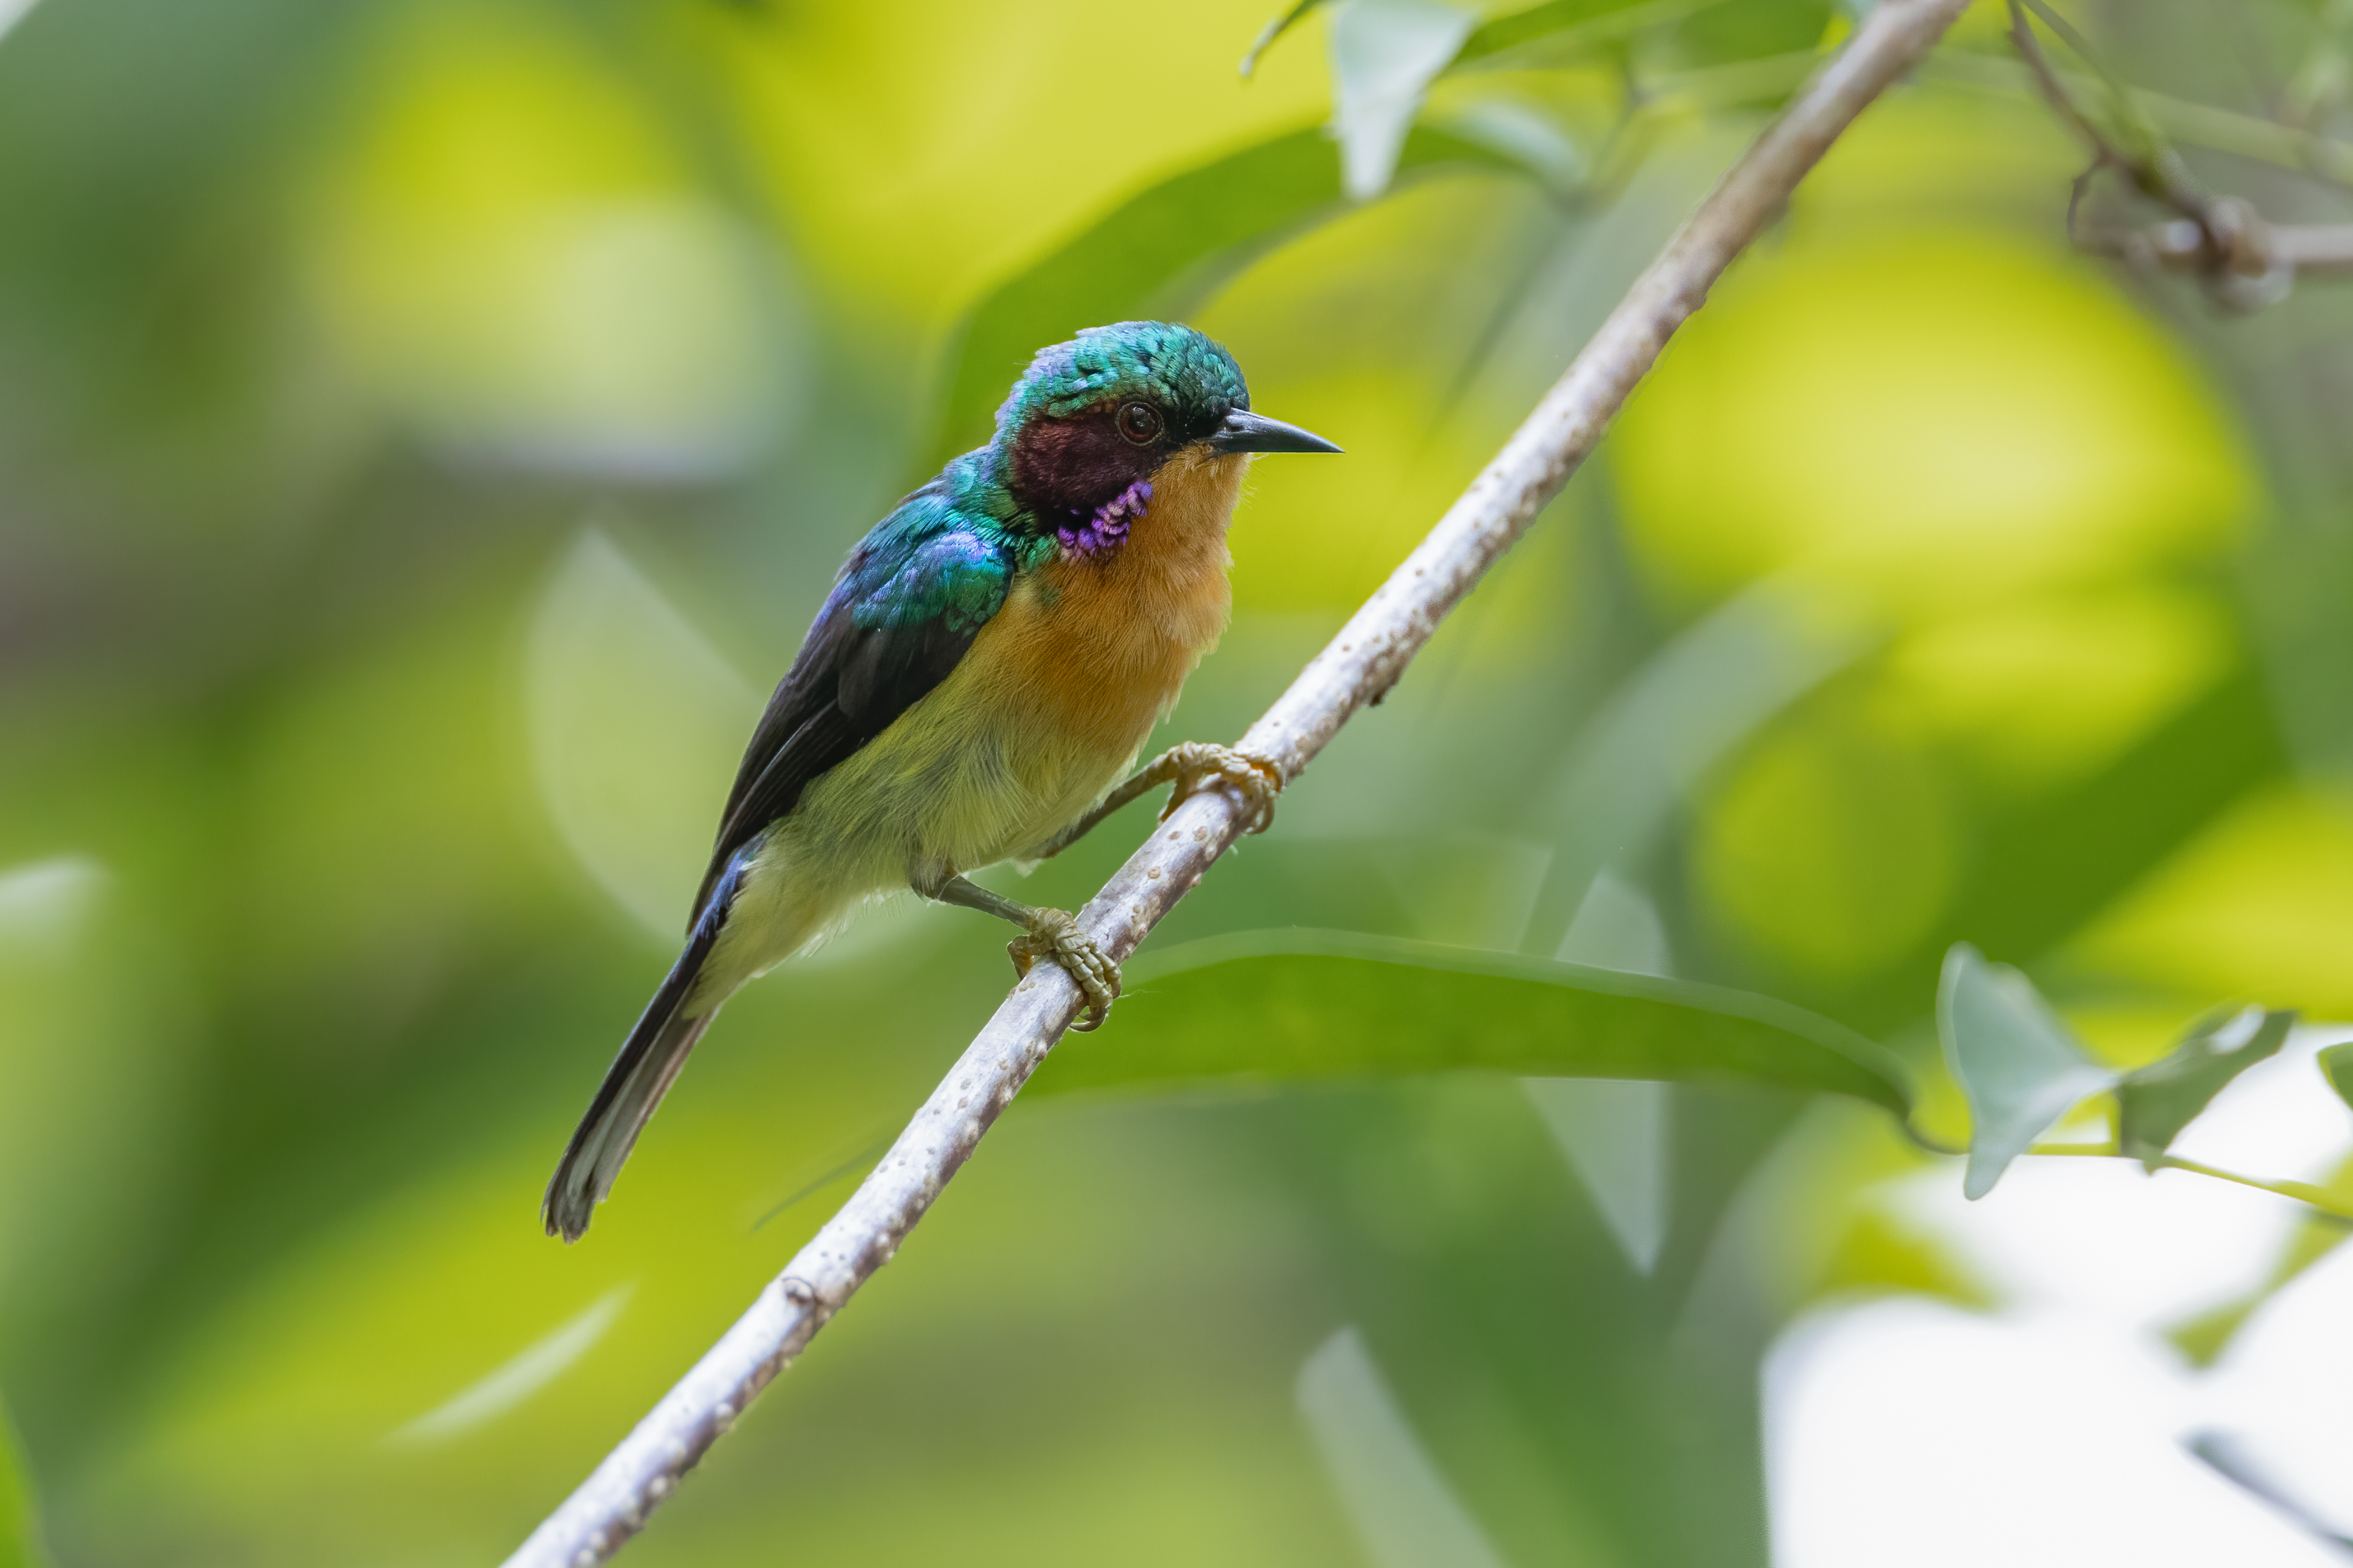 Ruby-cheeked Sunbird at Sungei Buloh Wetland Reserve. Photo credit: Adrian Silas Tay